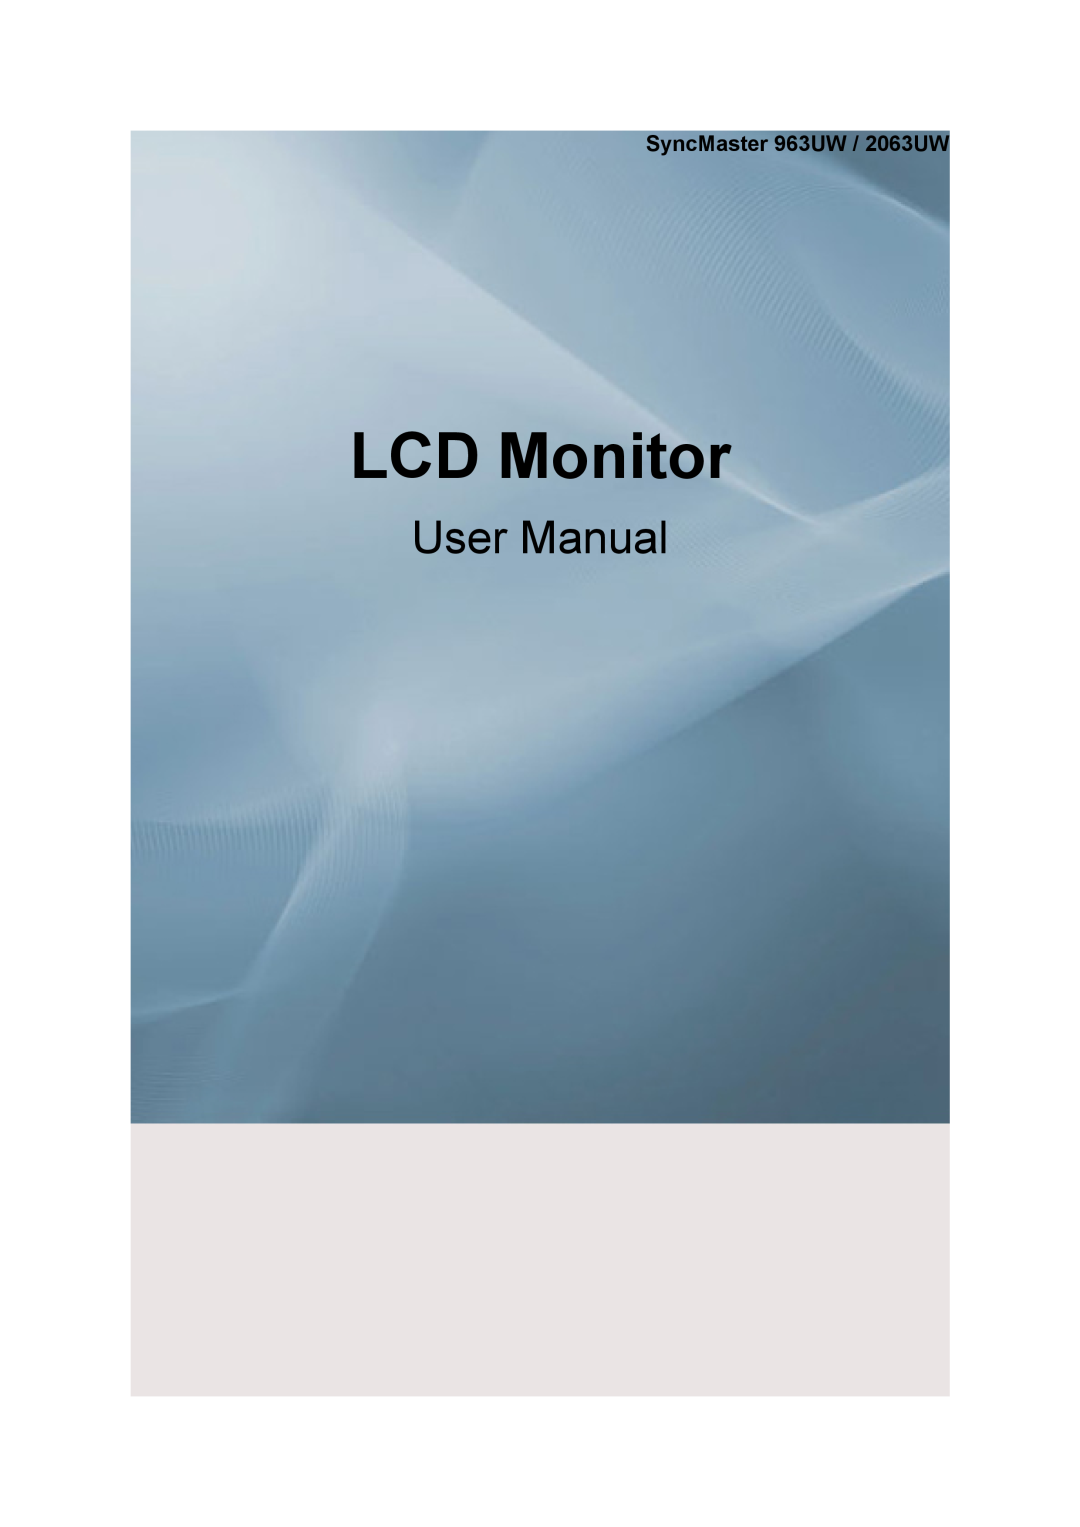 Samsung user manual SyncMaster 963UW / 2063UW, LCD Monitor, User Manual 